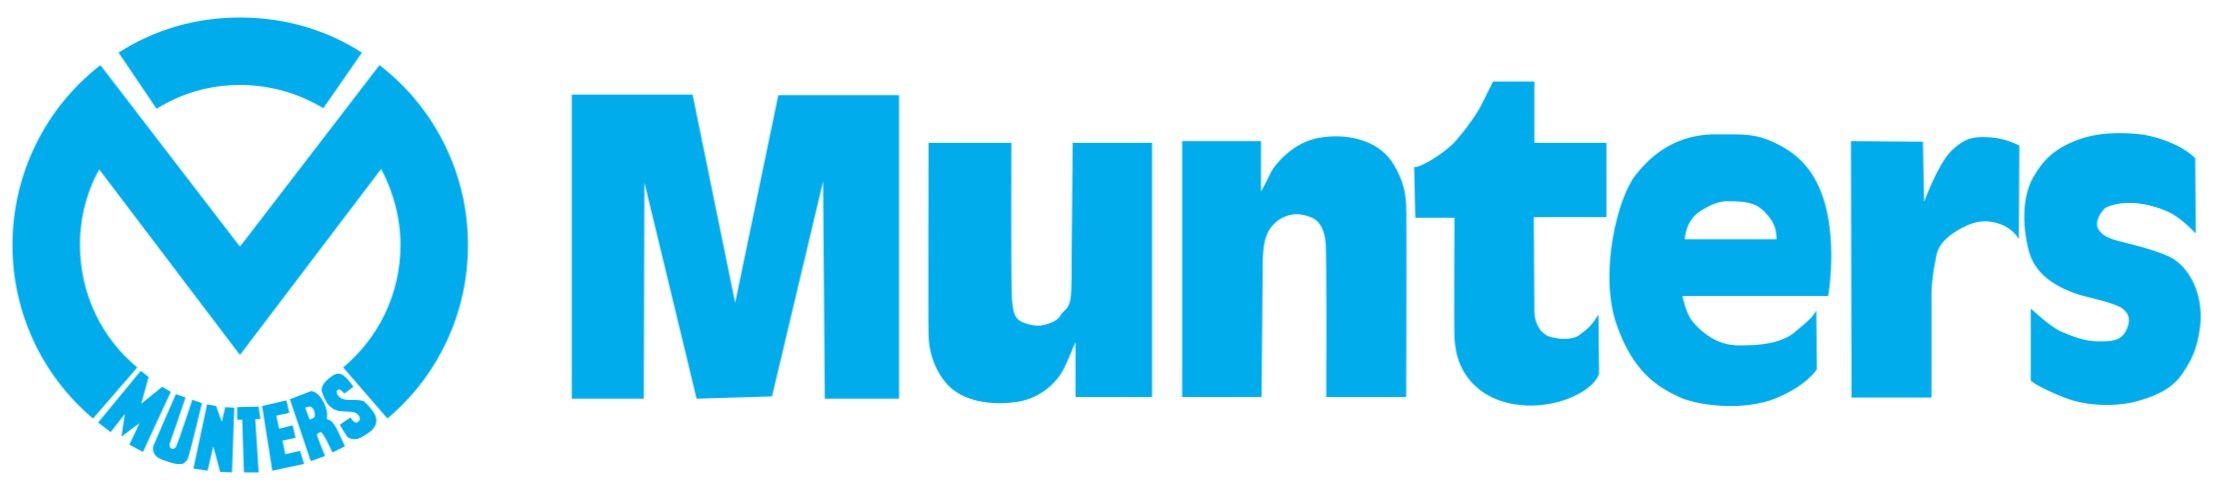 MUNTERS_logo.jpg